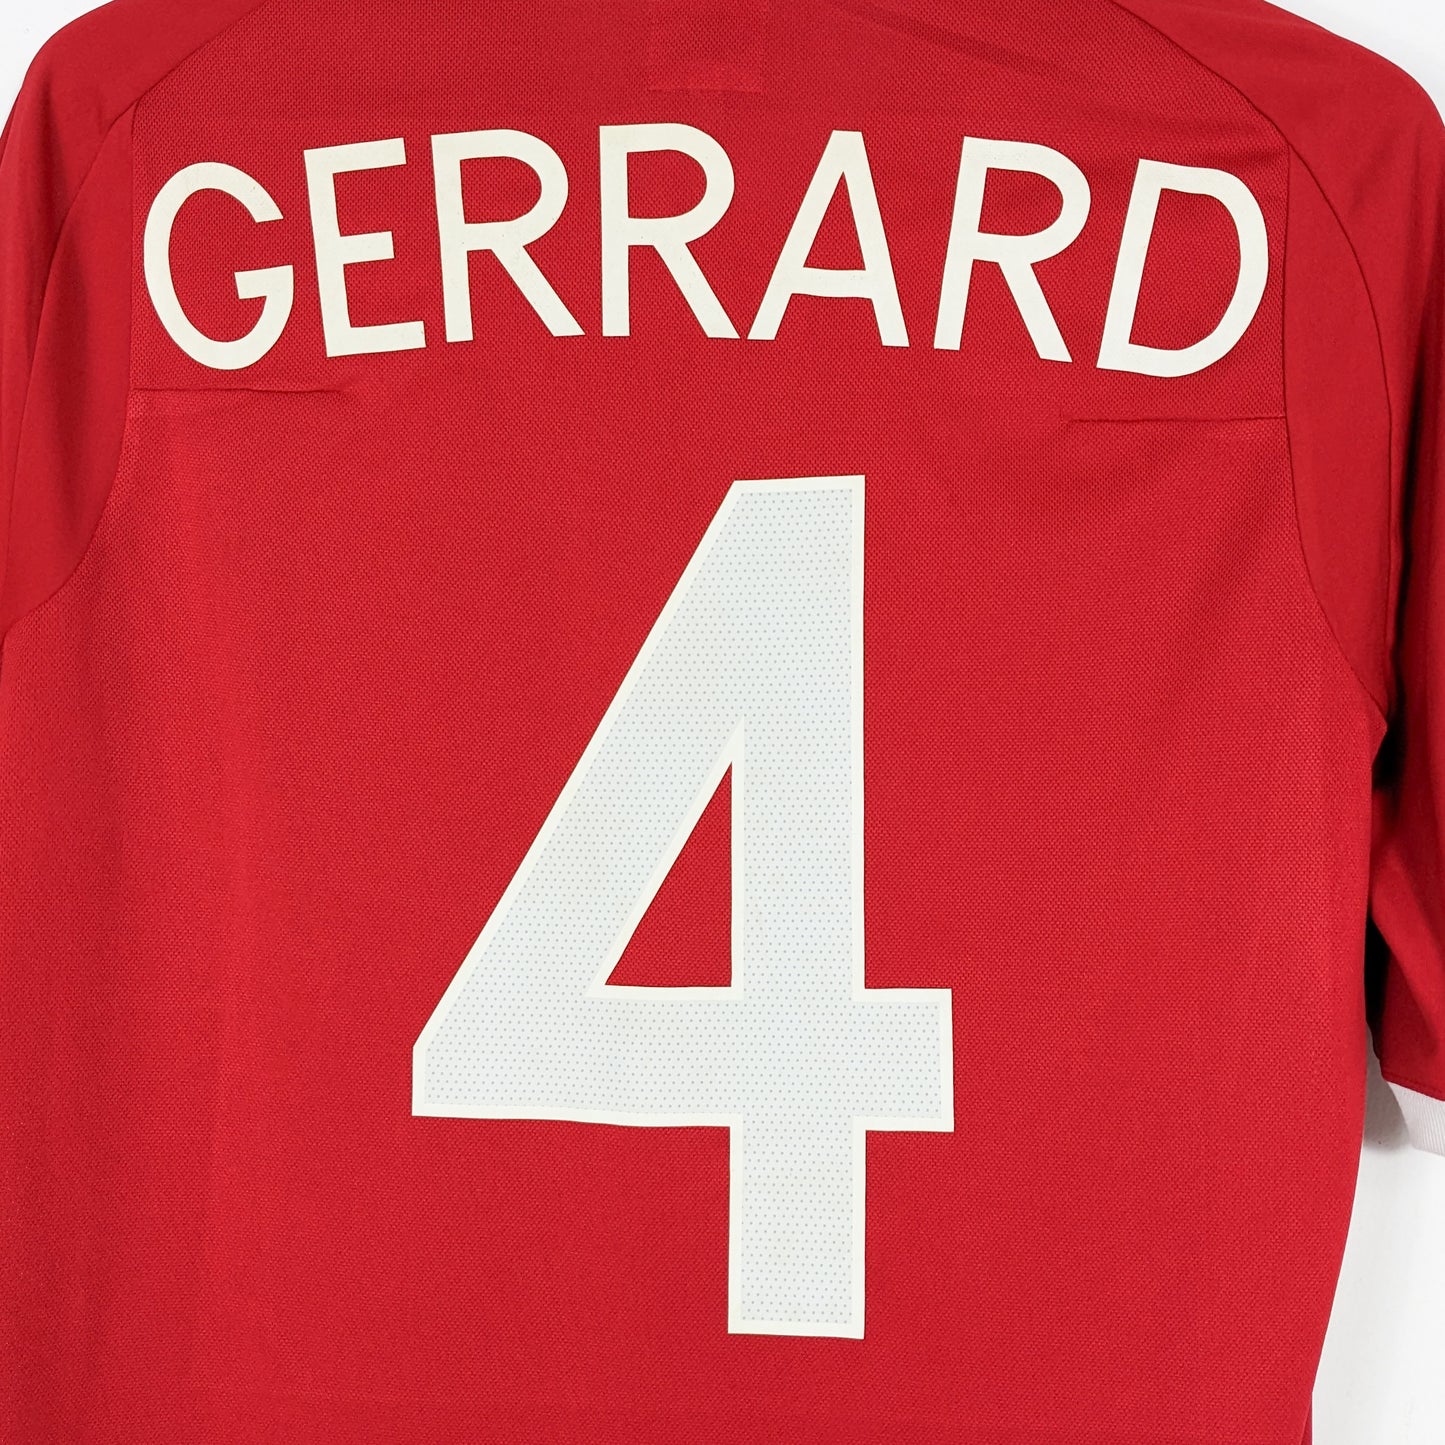 Authentic England 2010/2011 Away - Gerrard #4 Size L